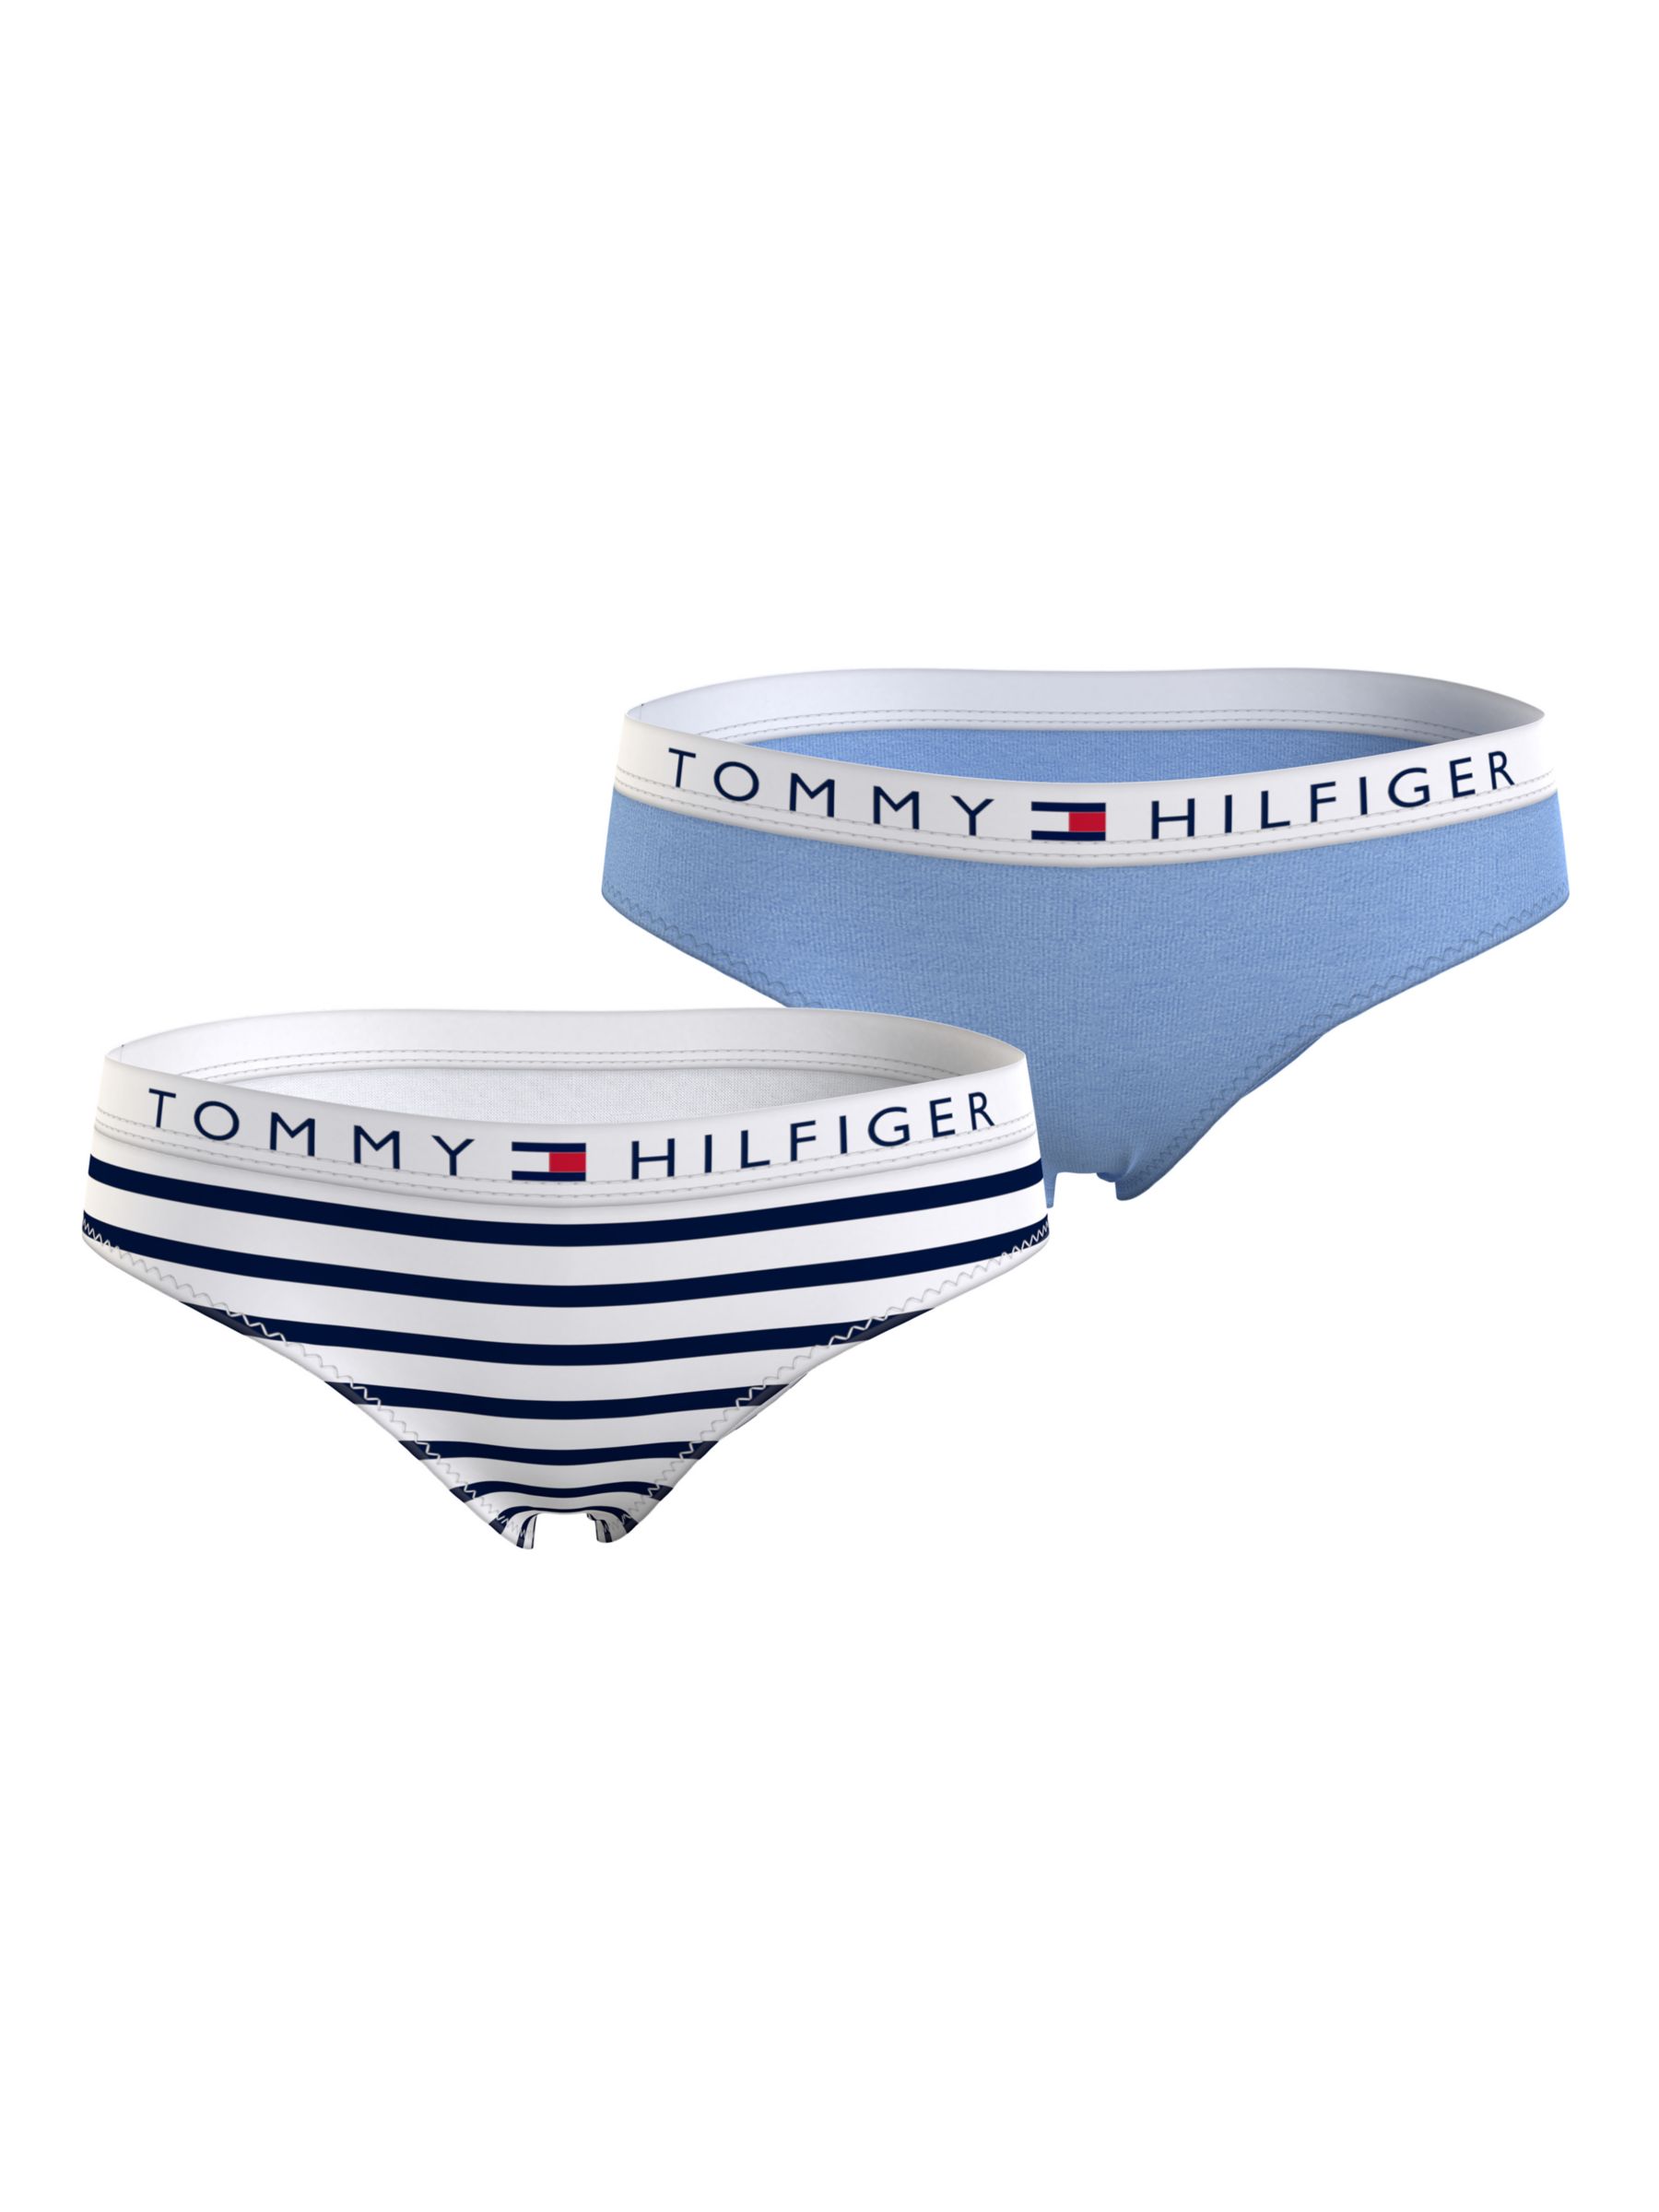 Tommy Hilfiger Kids' Logo Bikini Briefs, Pack of 2, Desert Sky/Multi, 8-10  years